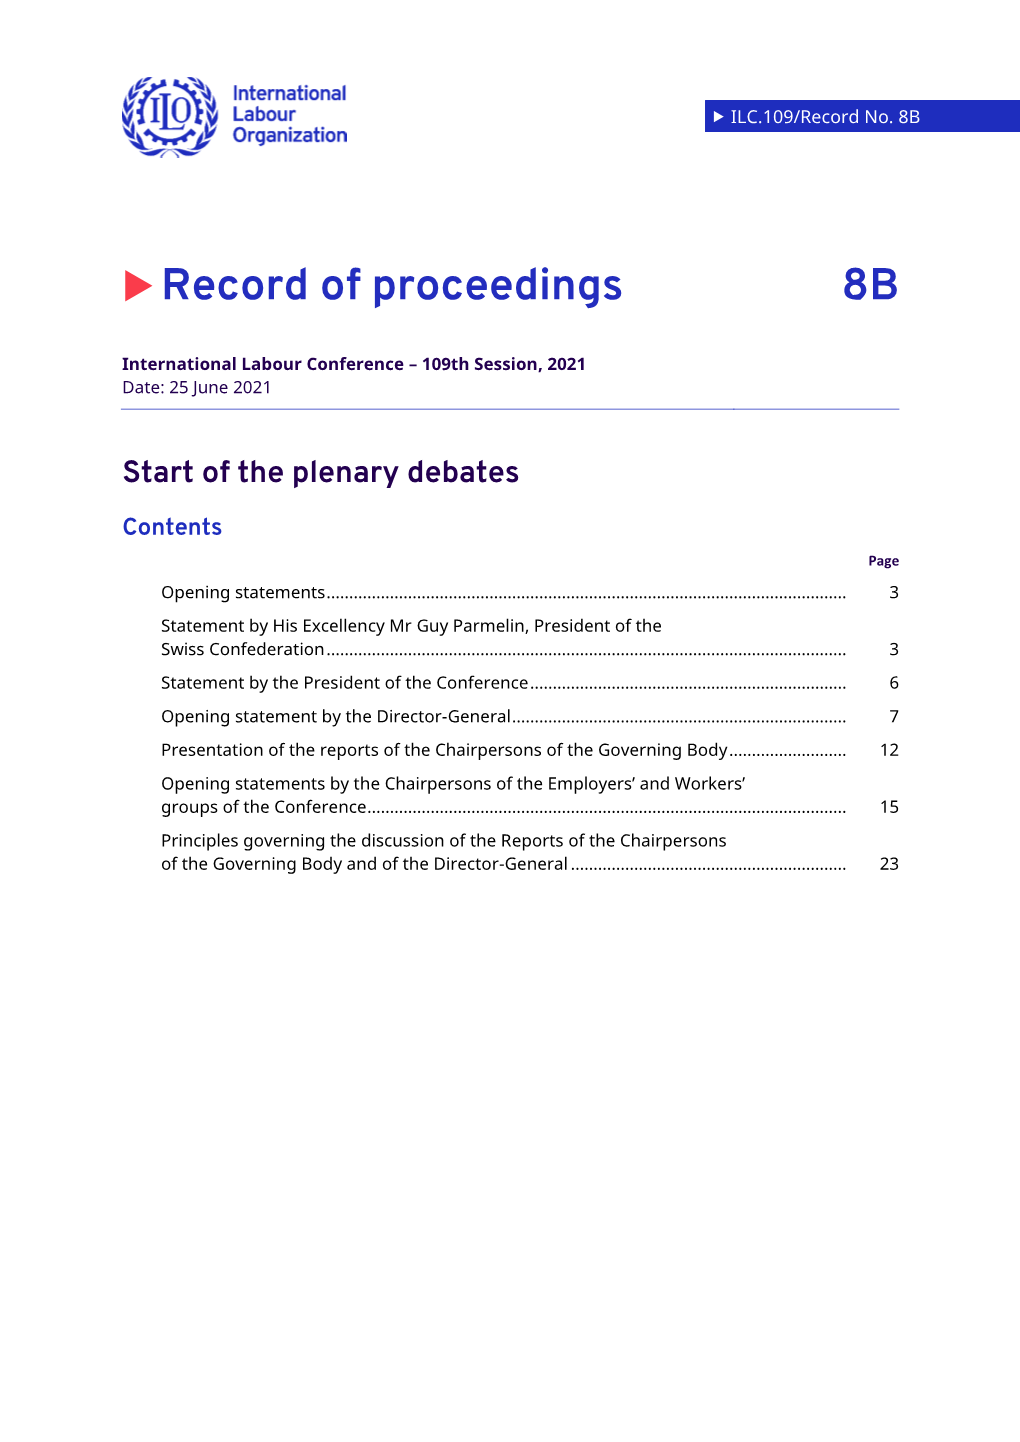 Record of Proceedings 8B